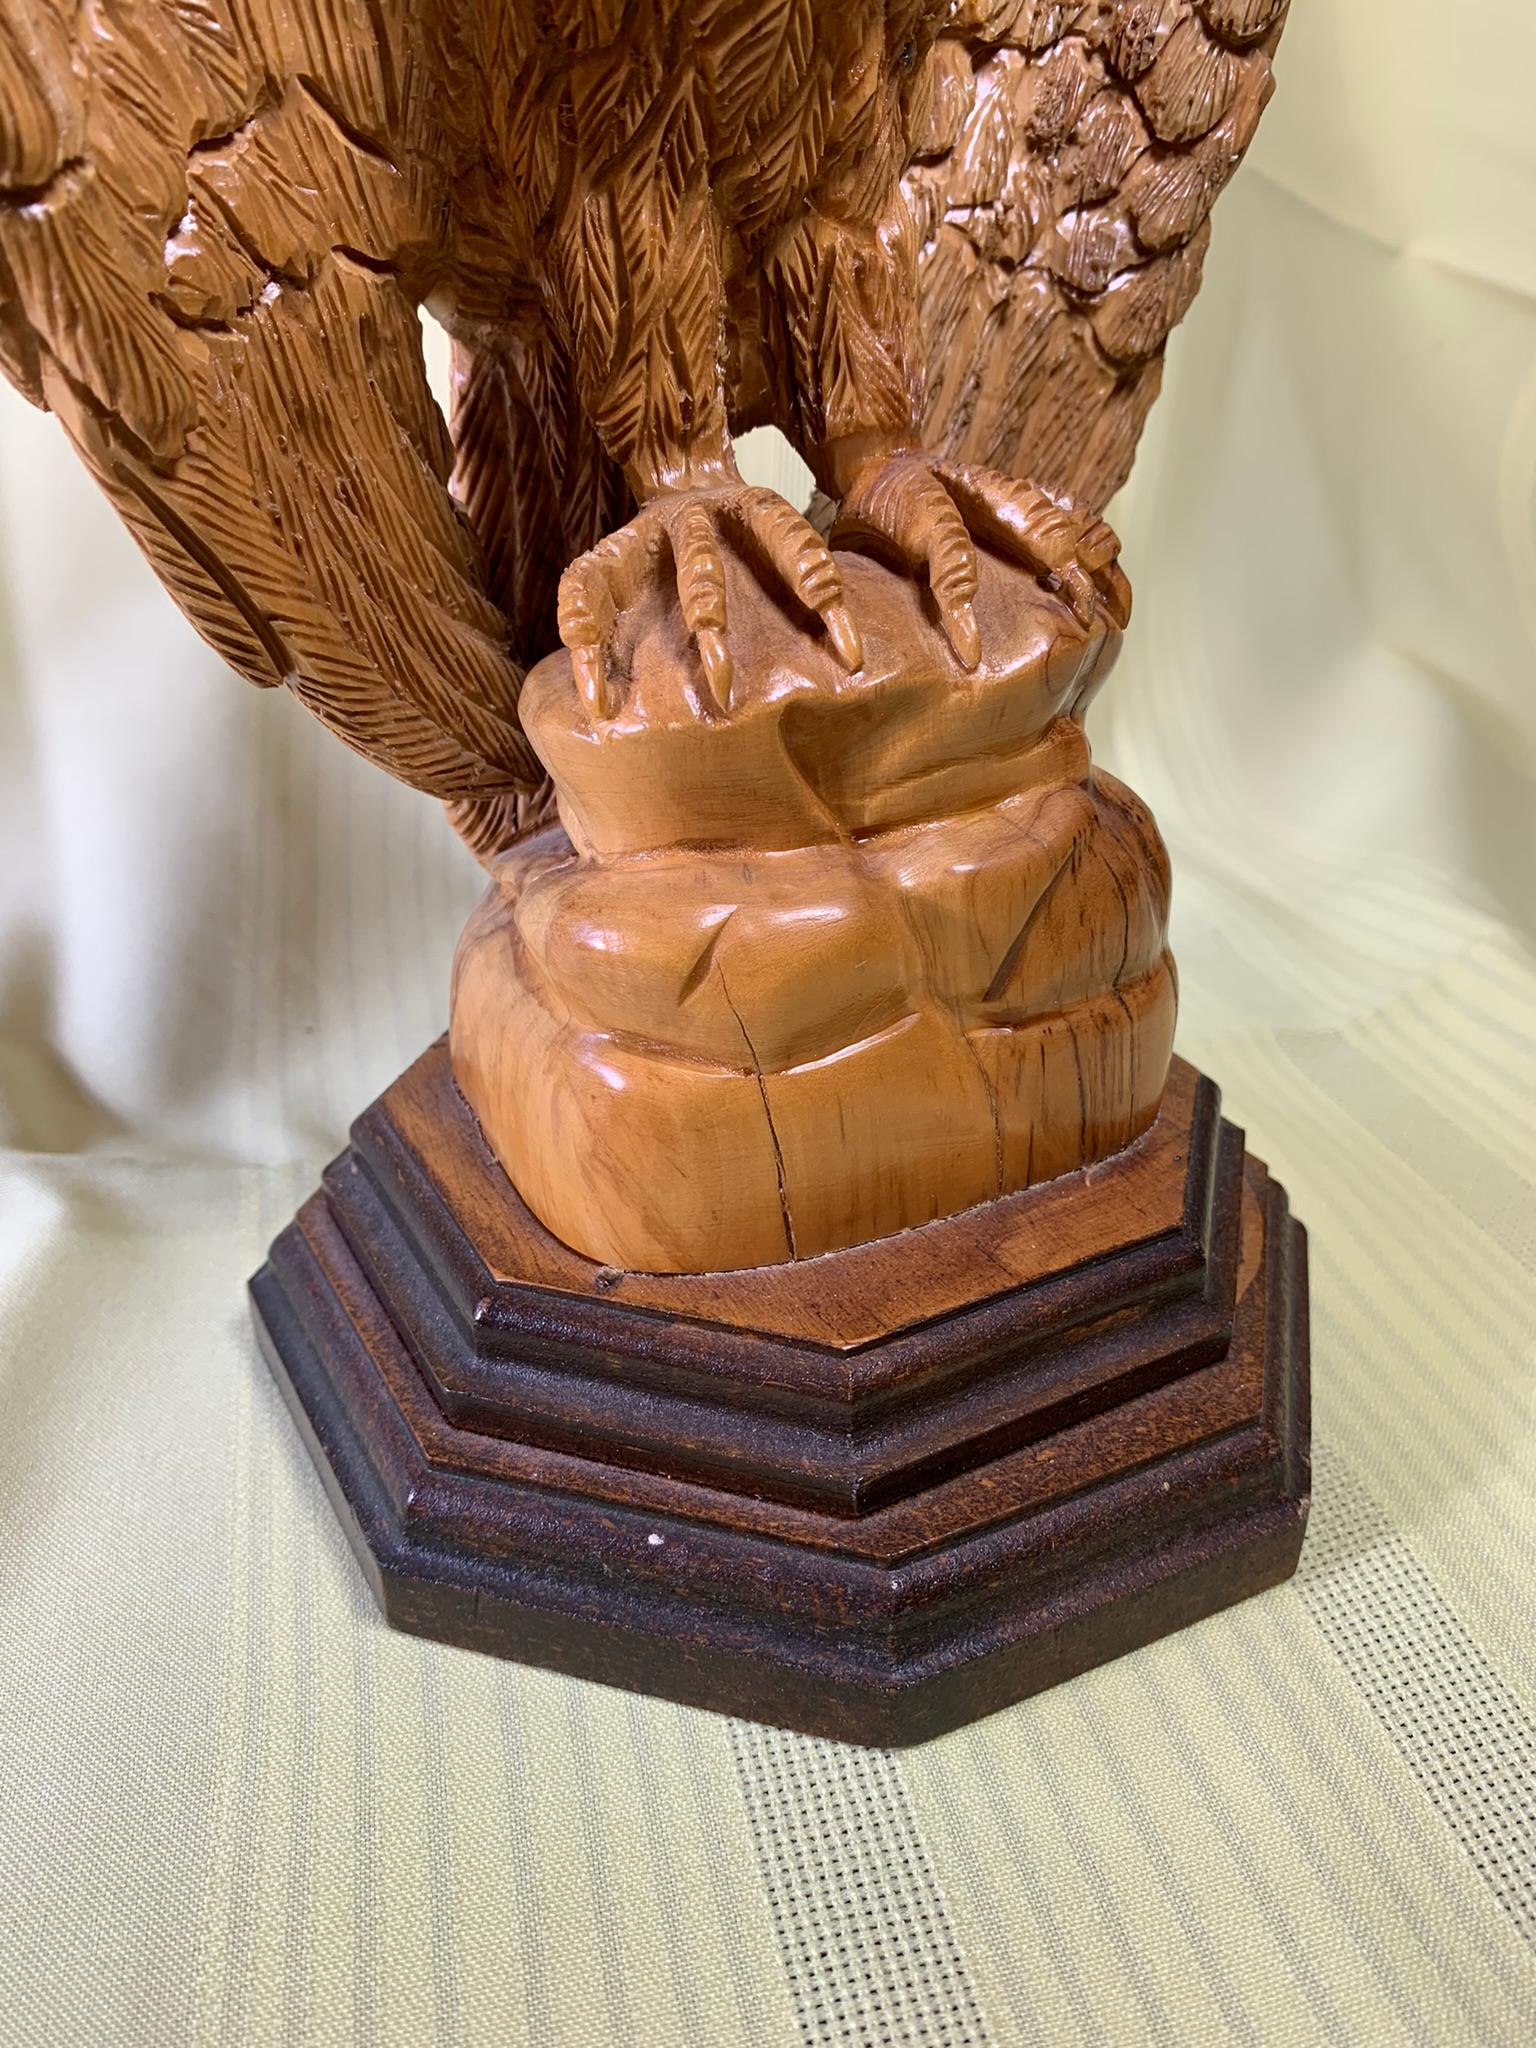 Carved Wooden Eagle Statue